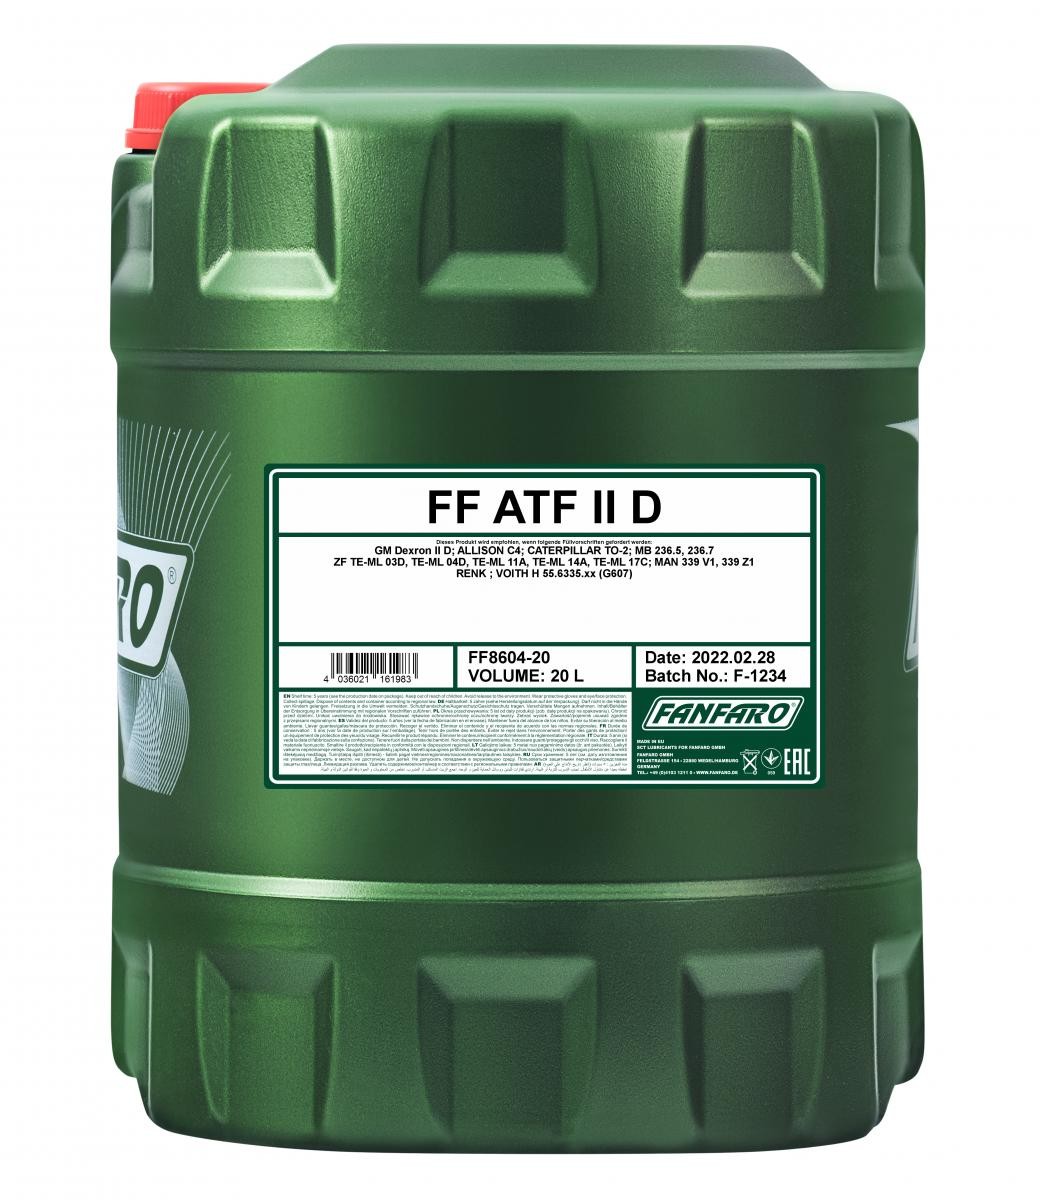 Gear oil FANFARO ATF II D ATF II, 20l, yellow - FF8604-20